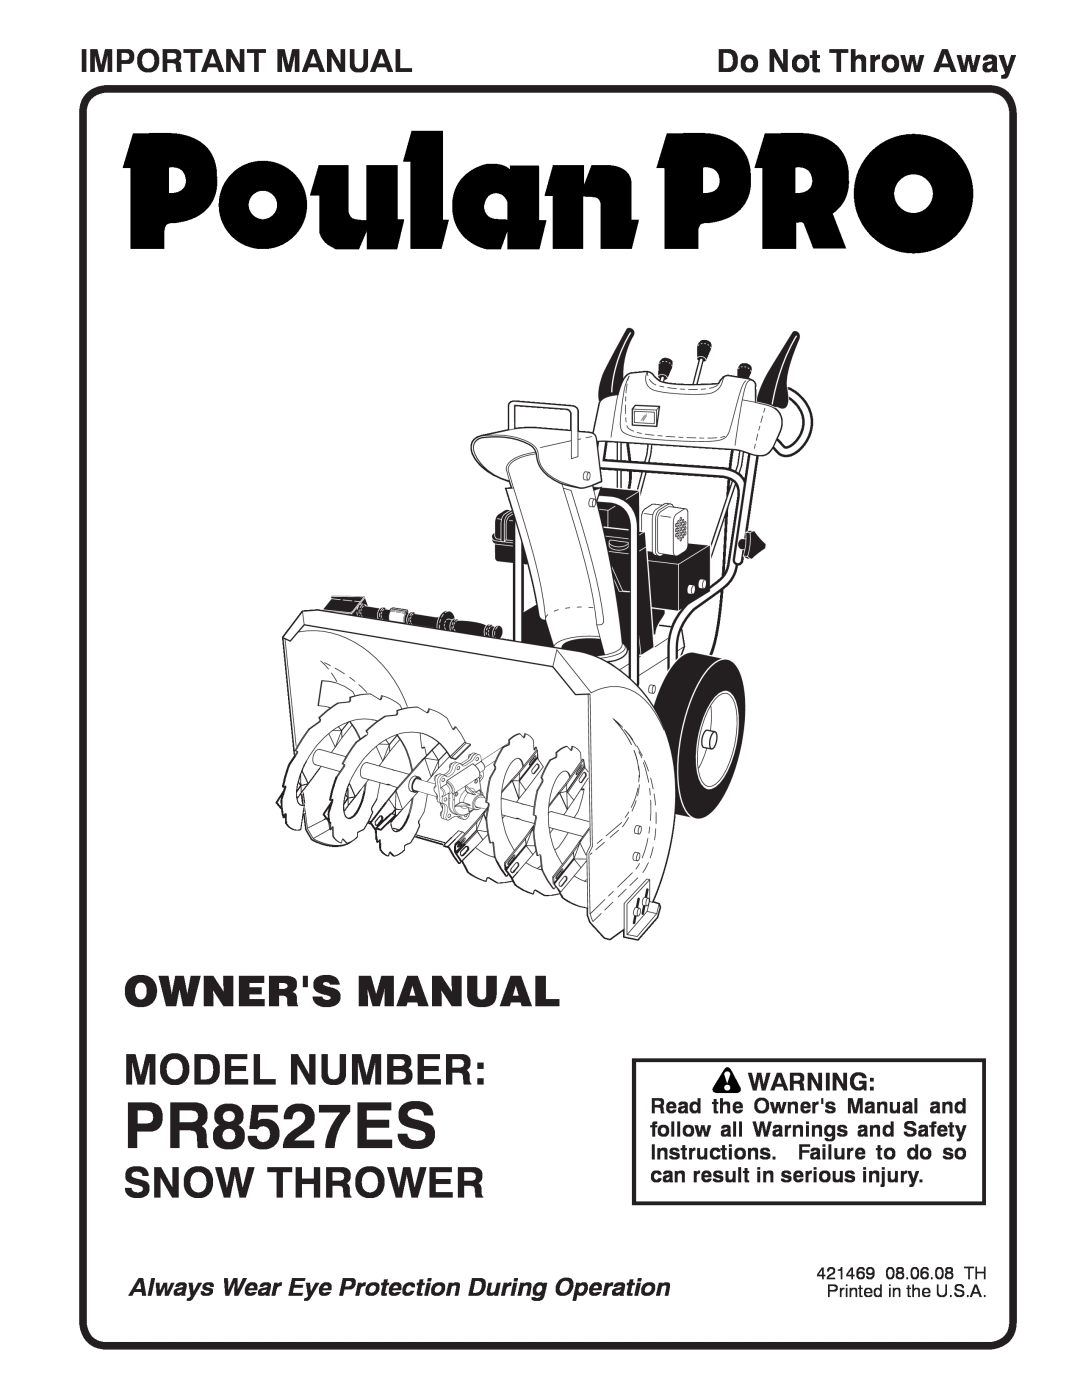 Poulan 421469 owner manual Snow Thrower, Important Manual, PR8527ES, Do Not Throw Away 